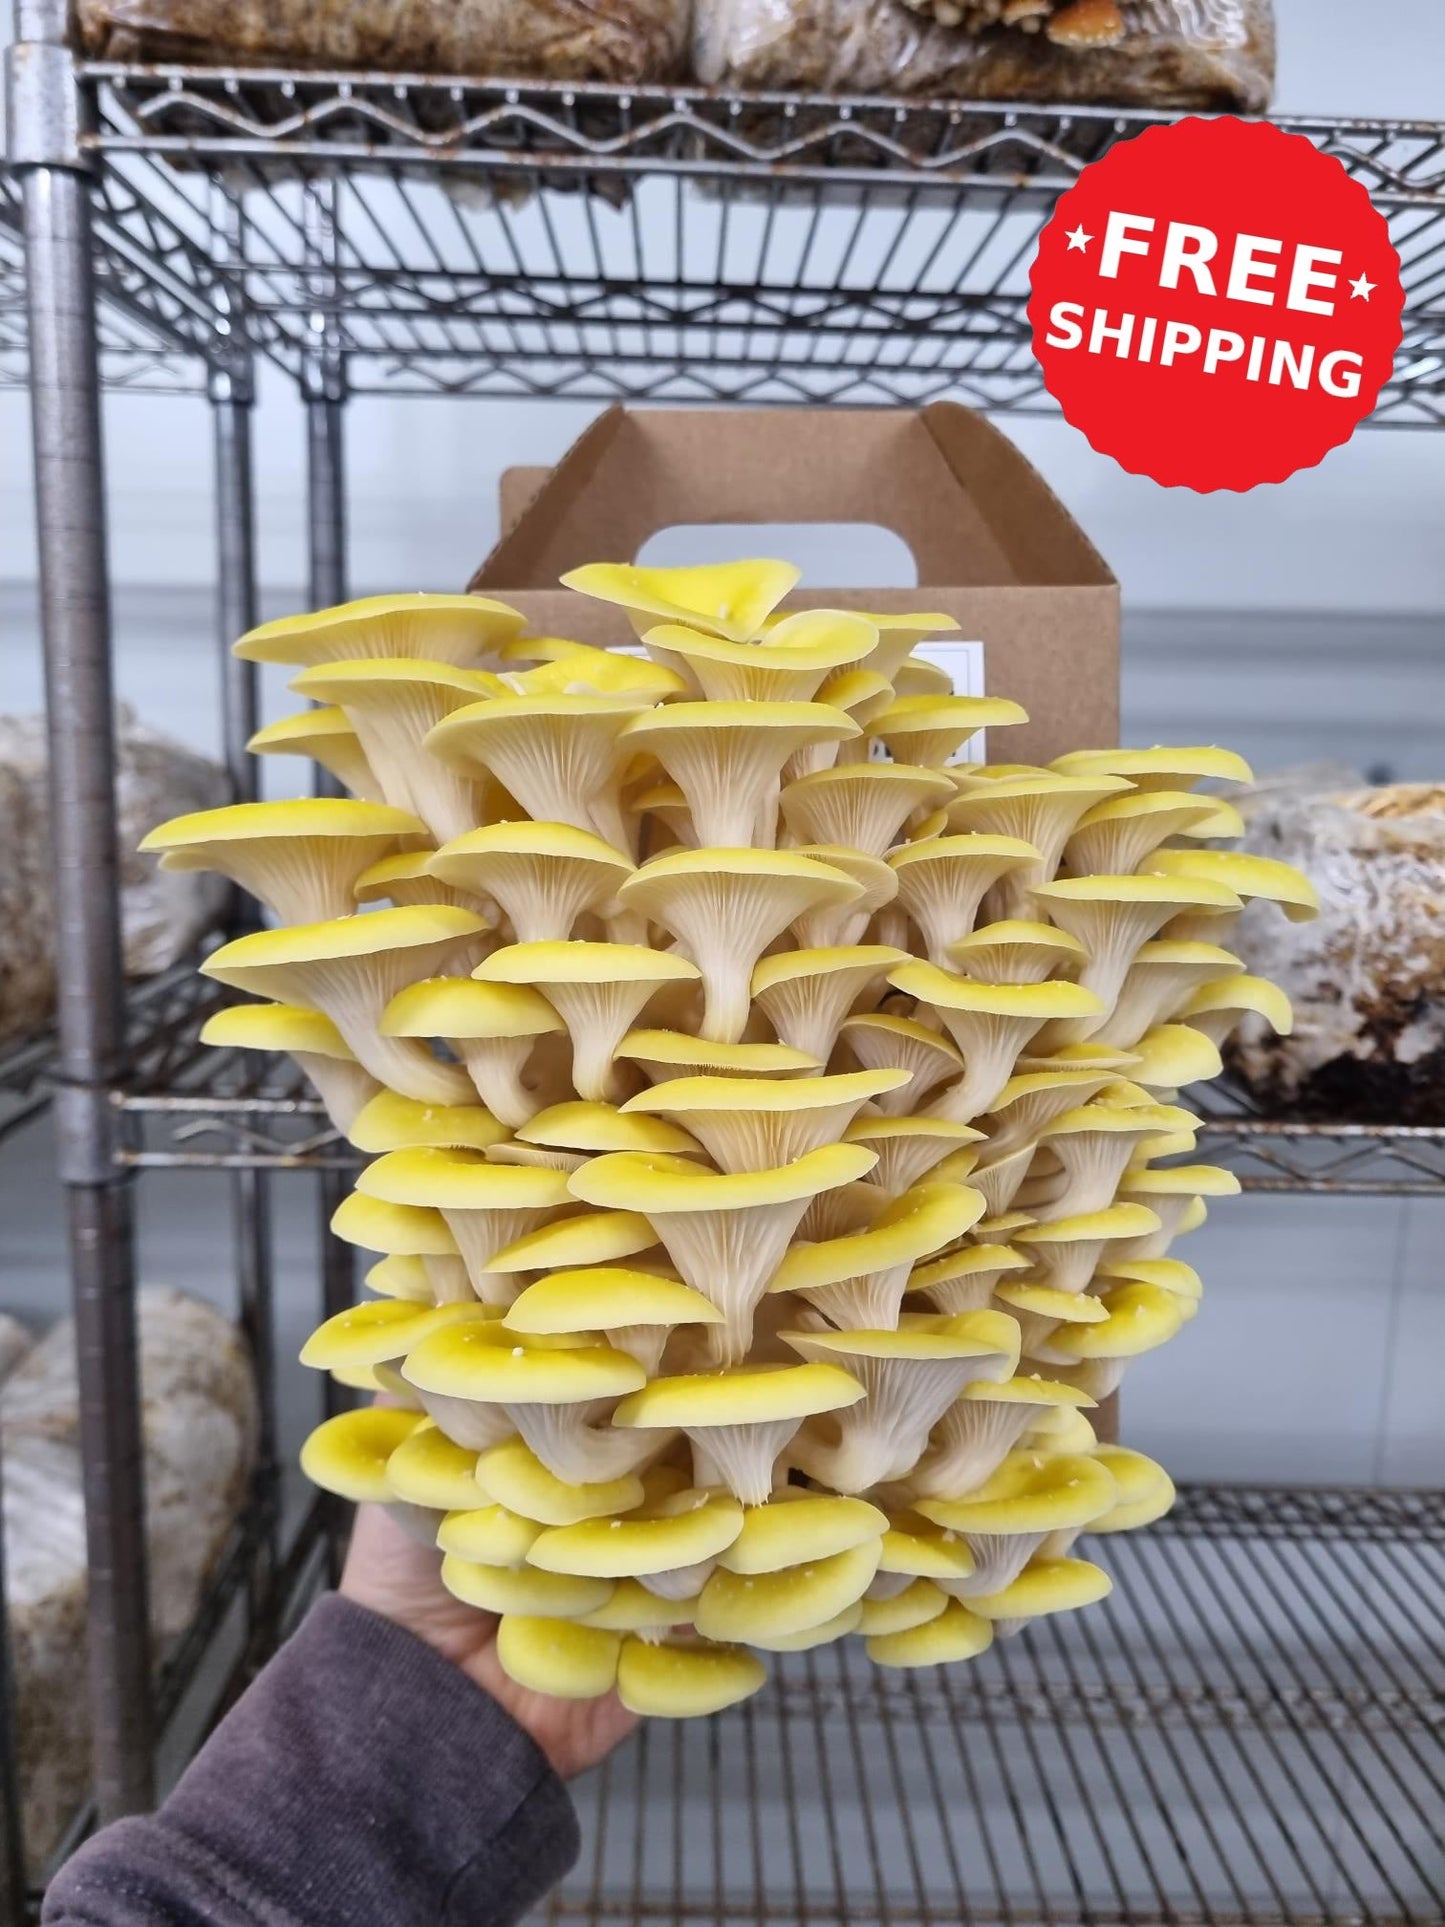 Yellow Oyster Mushroom Grow Kit - The Mushroom Connection